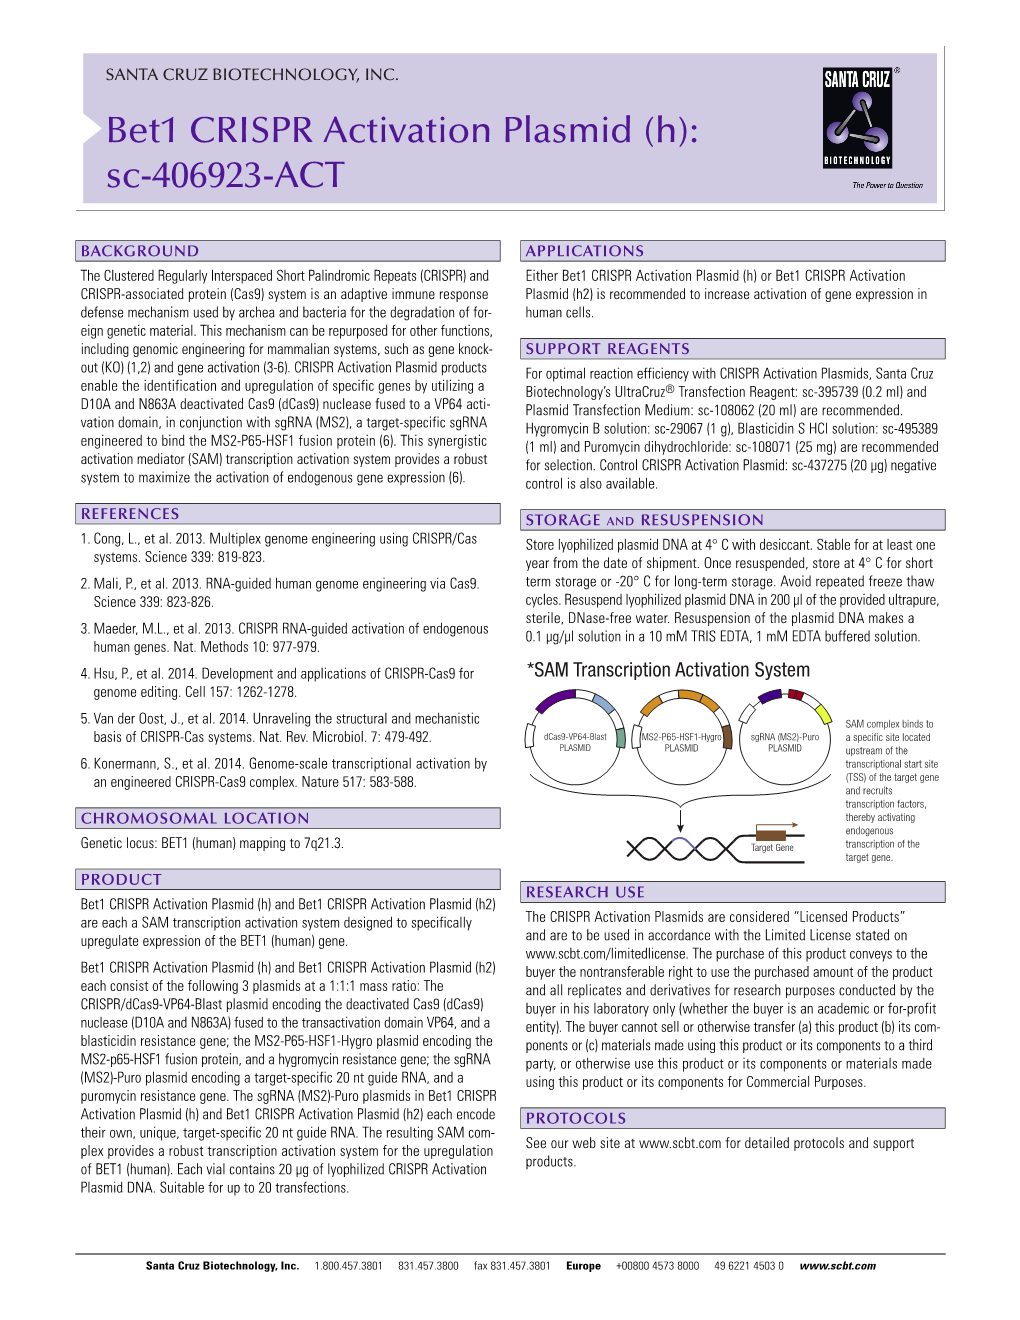 Bet1 CRISPR Activation Plasmid (H): Sc-406923-ACT